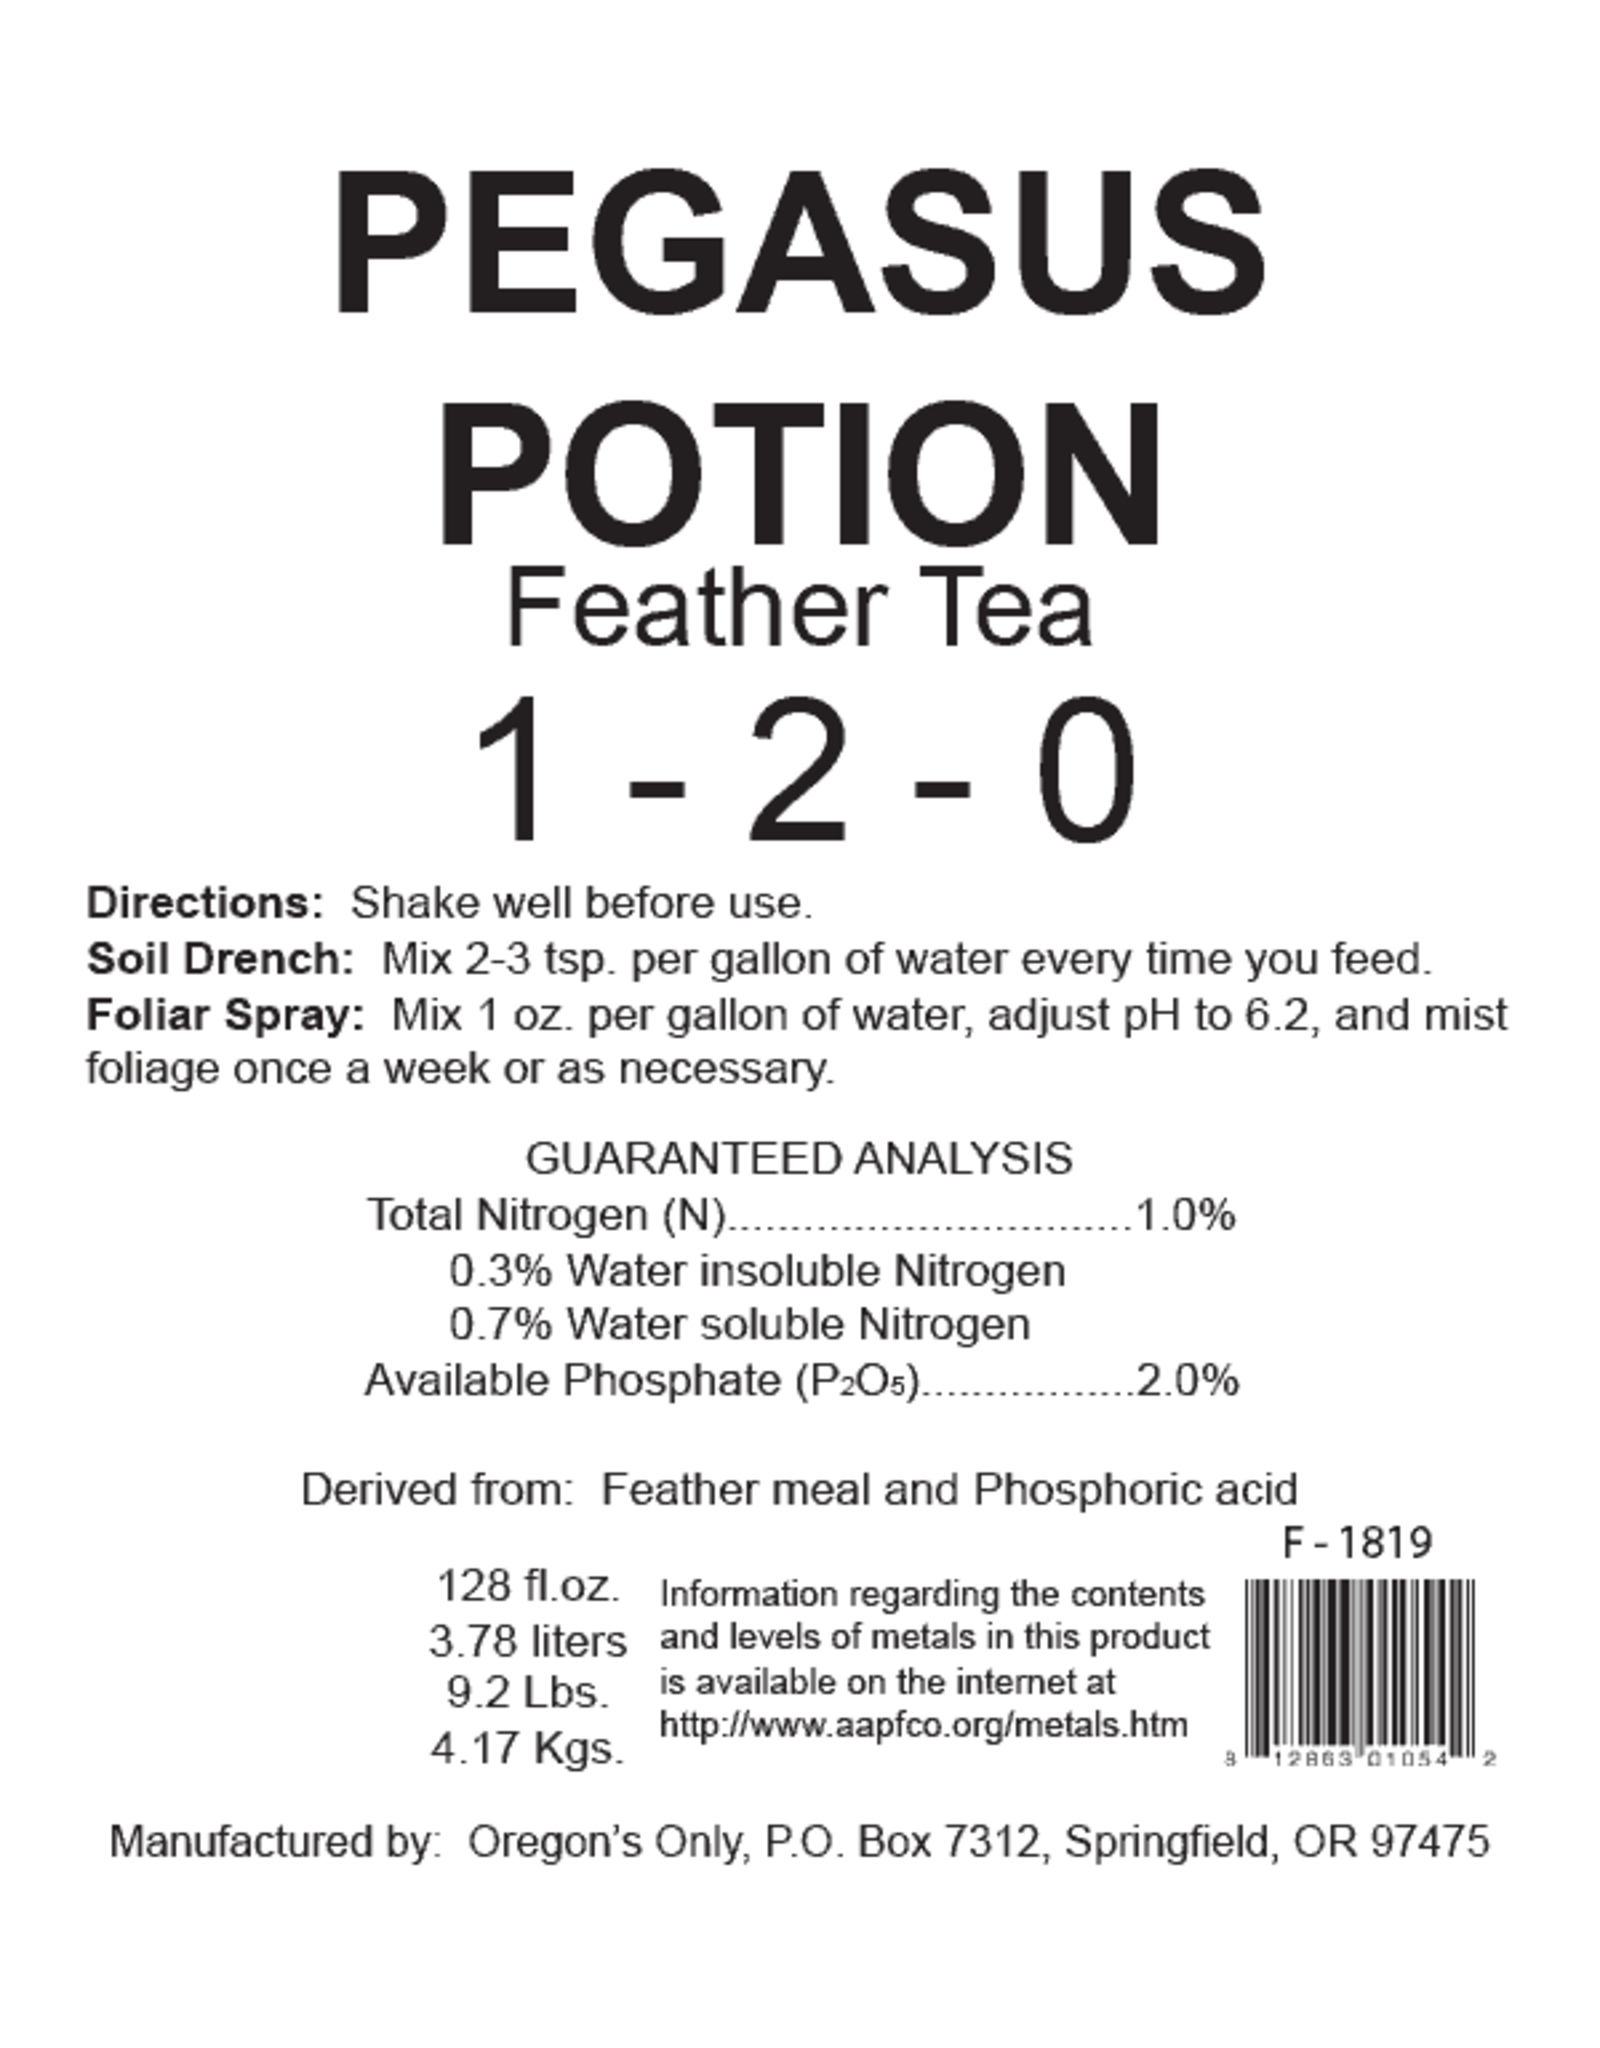 Nectar For The Gods Pegasus Potion 5 Gallon